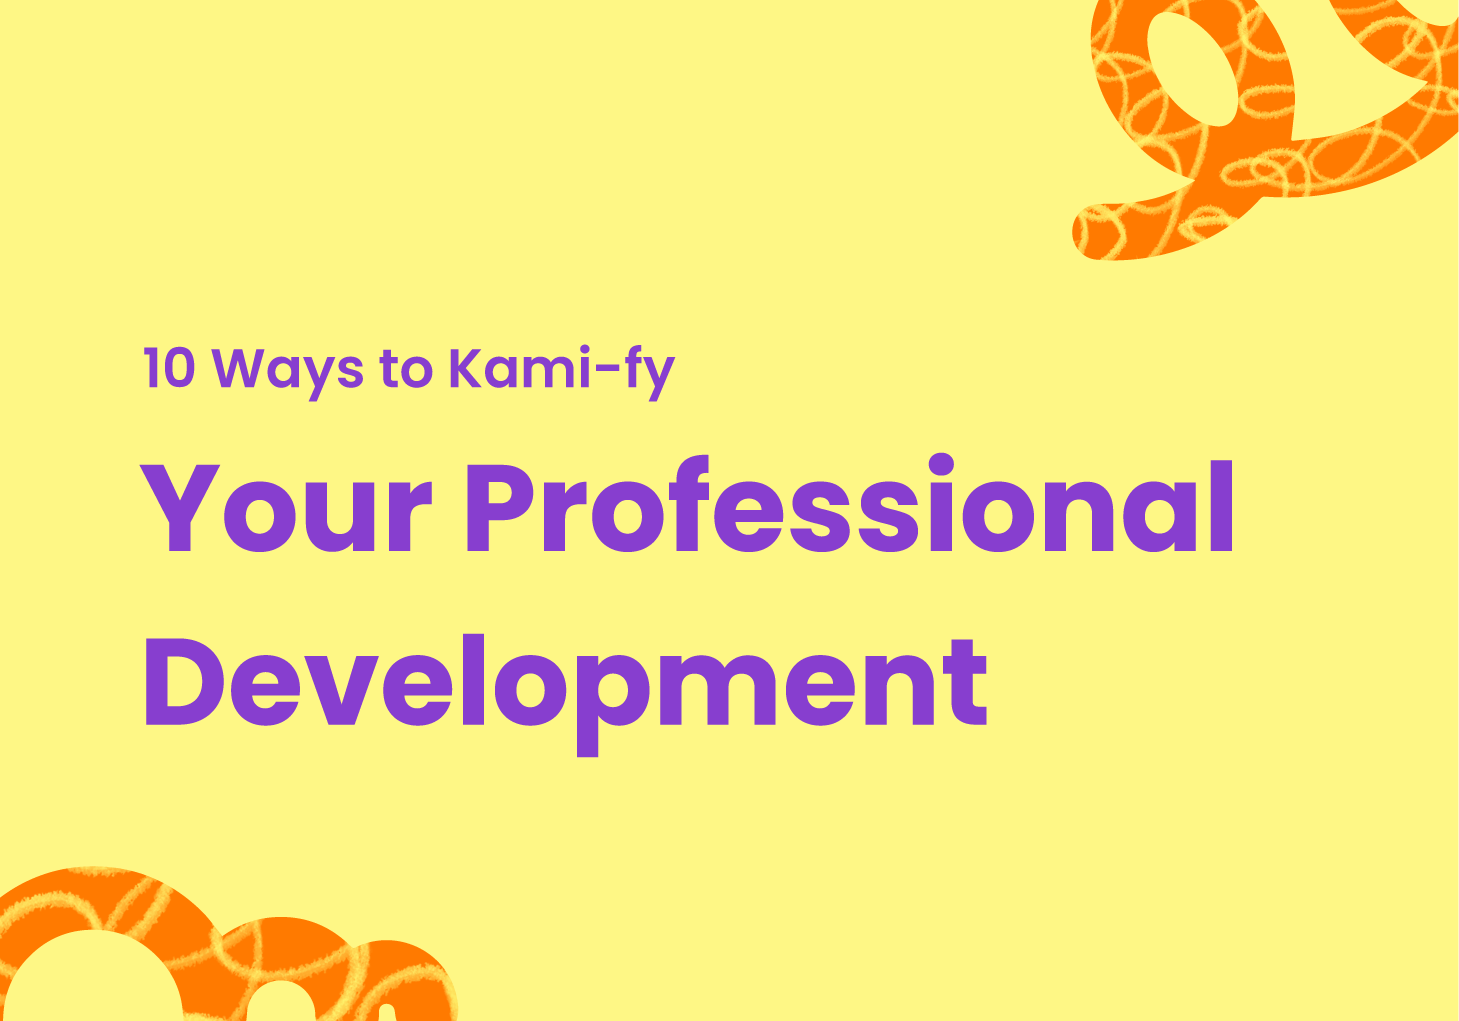 10 Ways to Kami-fy Your Professional Development